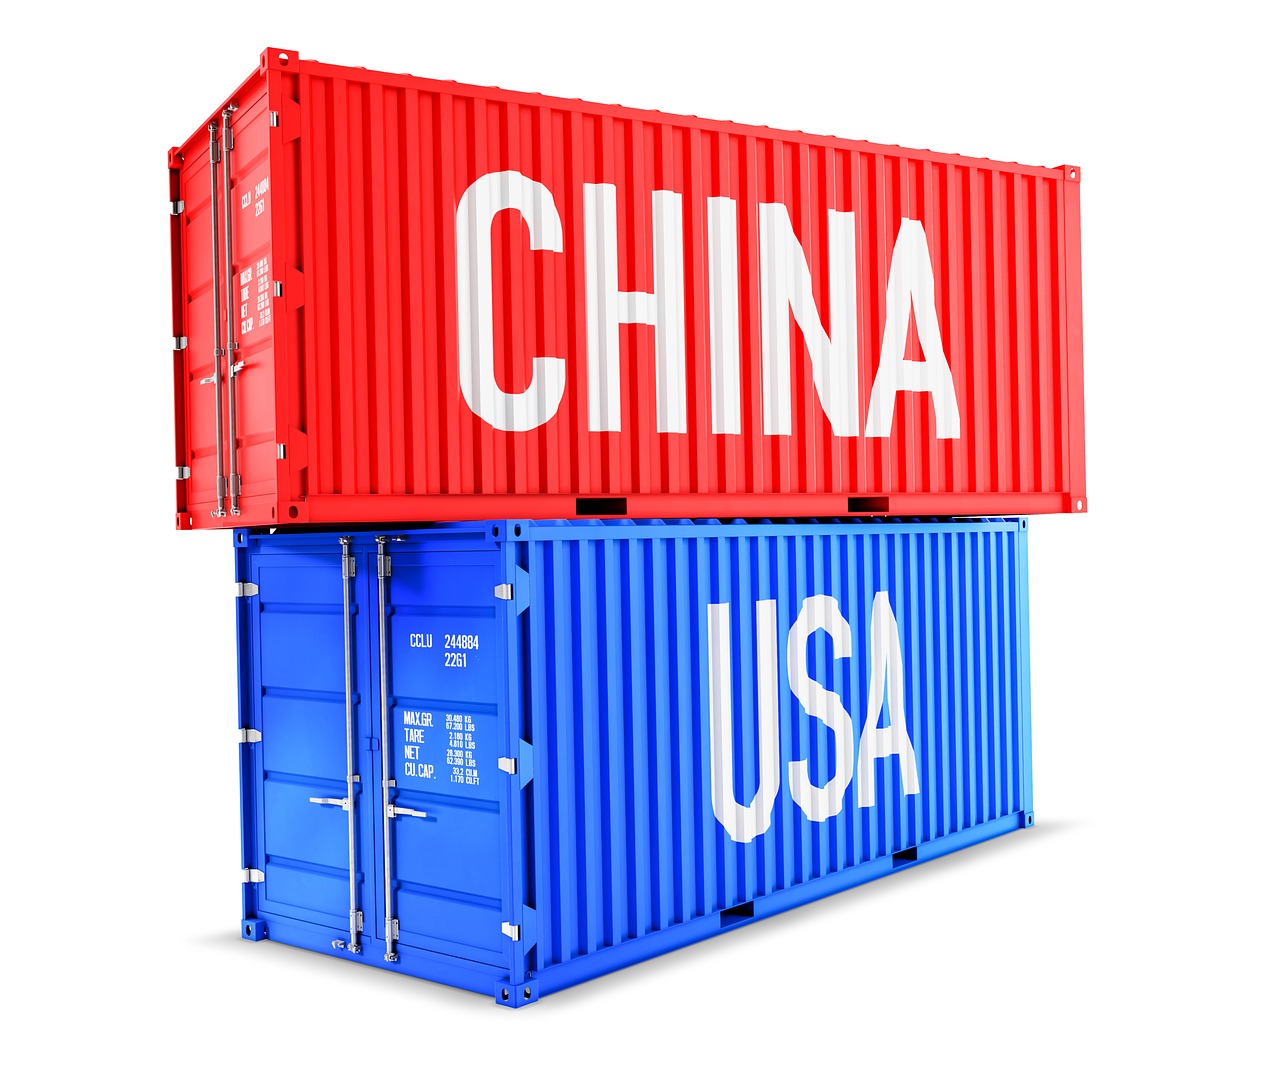 china-america-trade-cargo.jpg